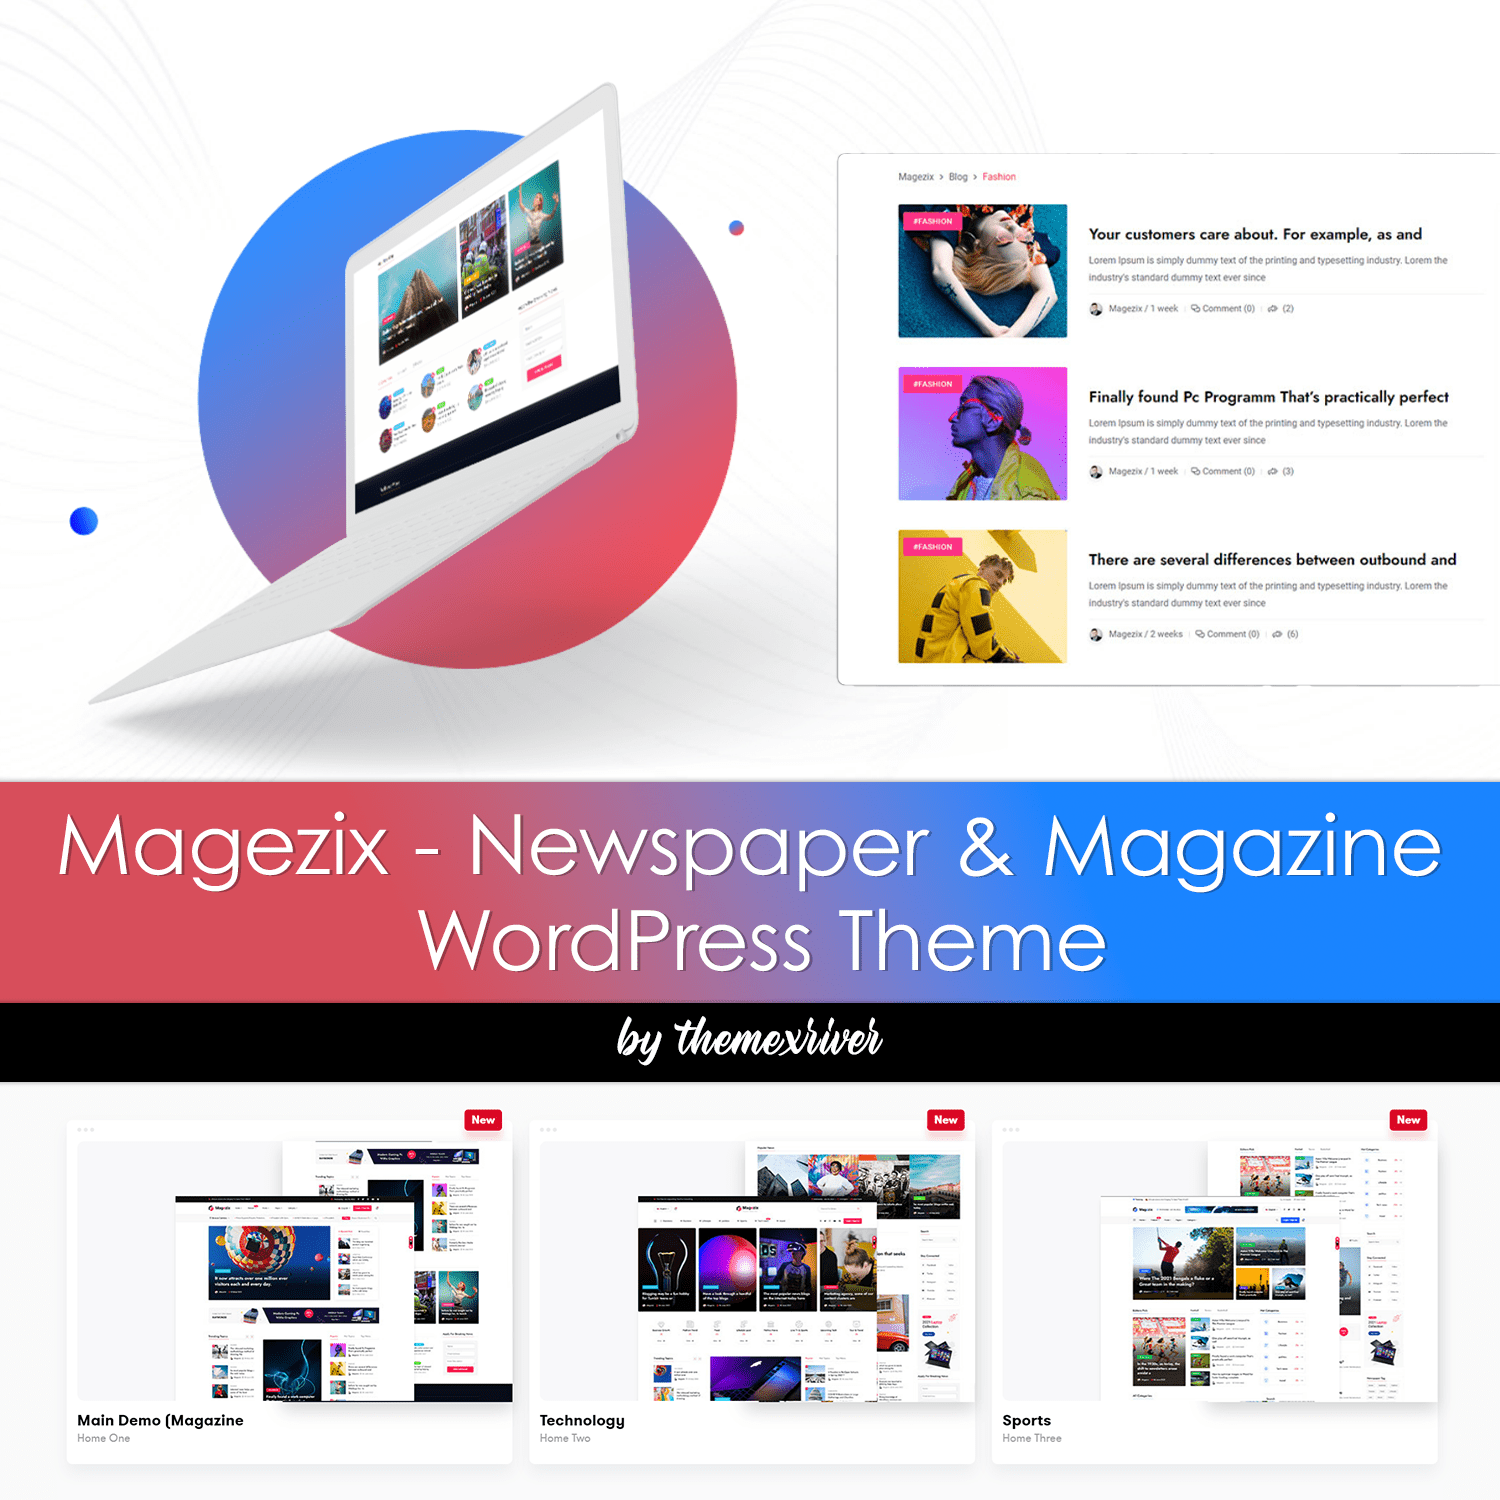 Main demo, techology, sports of Magezix - Newspaper & Magazine WordPress Theme.